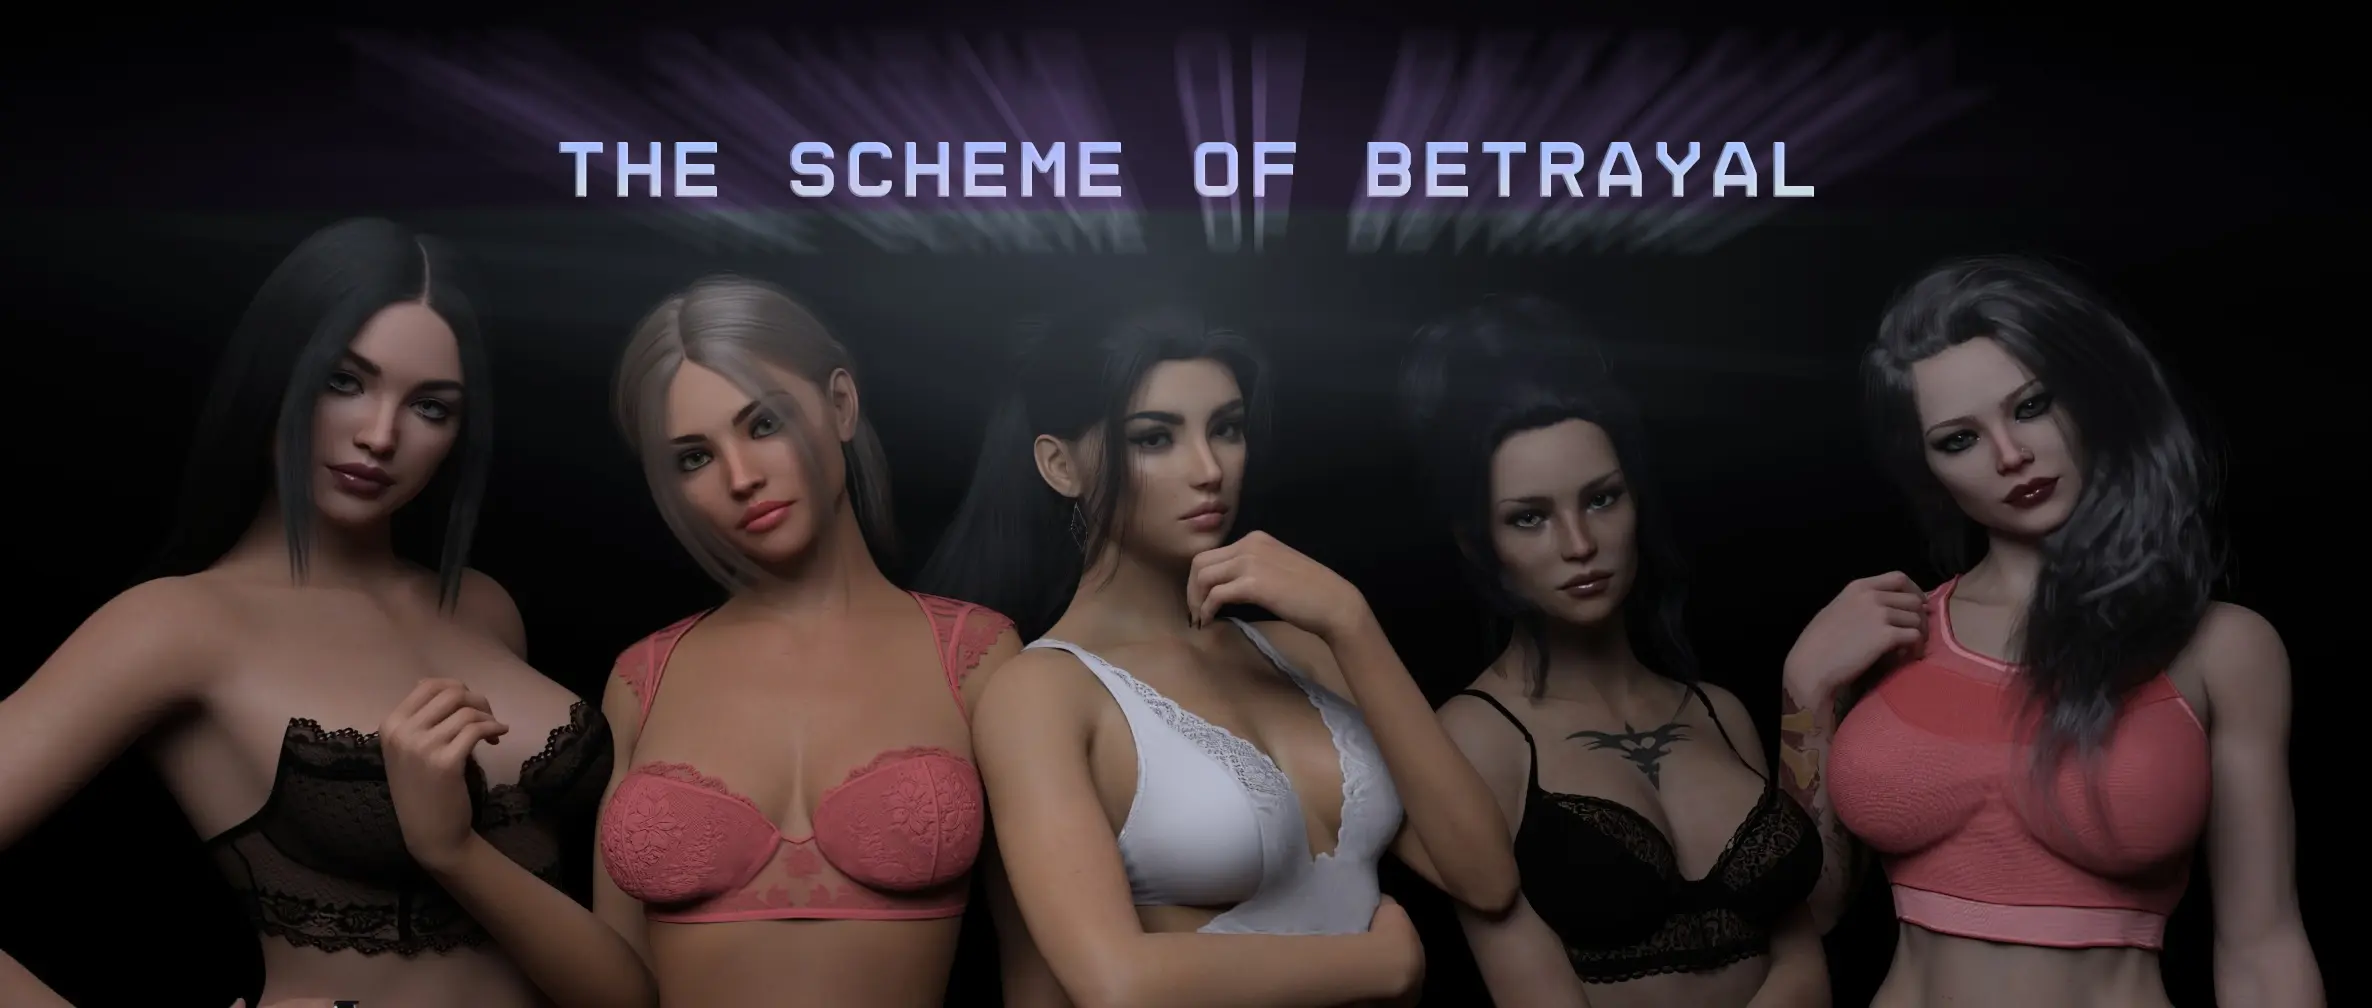 The Scheme of Betrayal main image